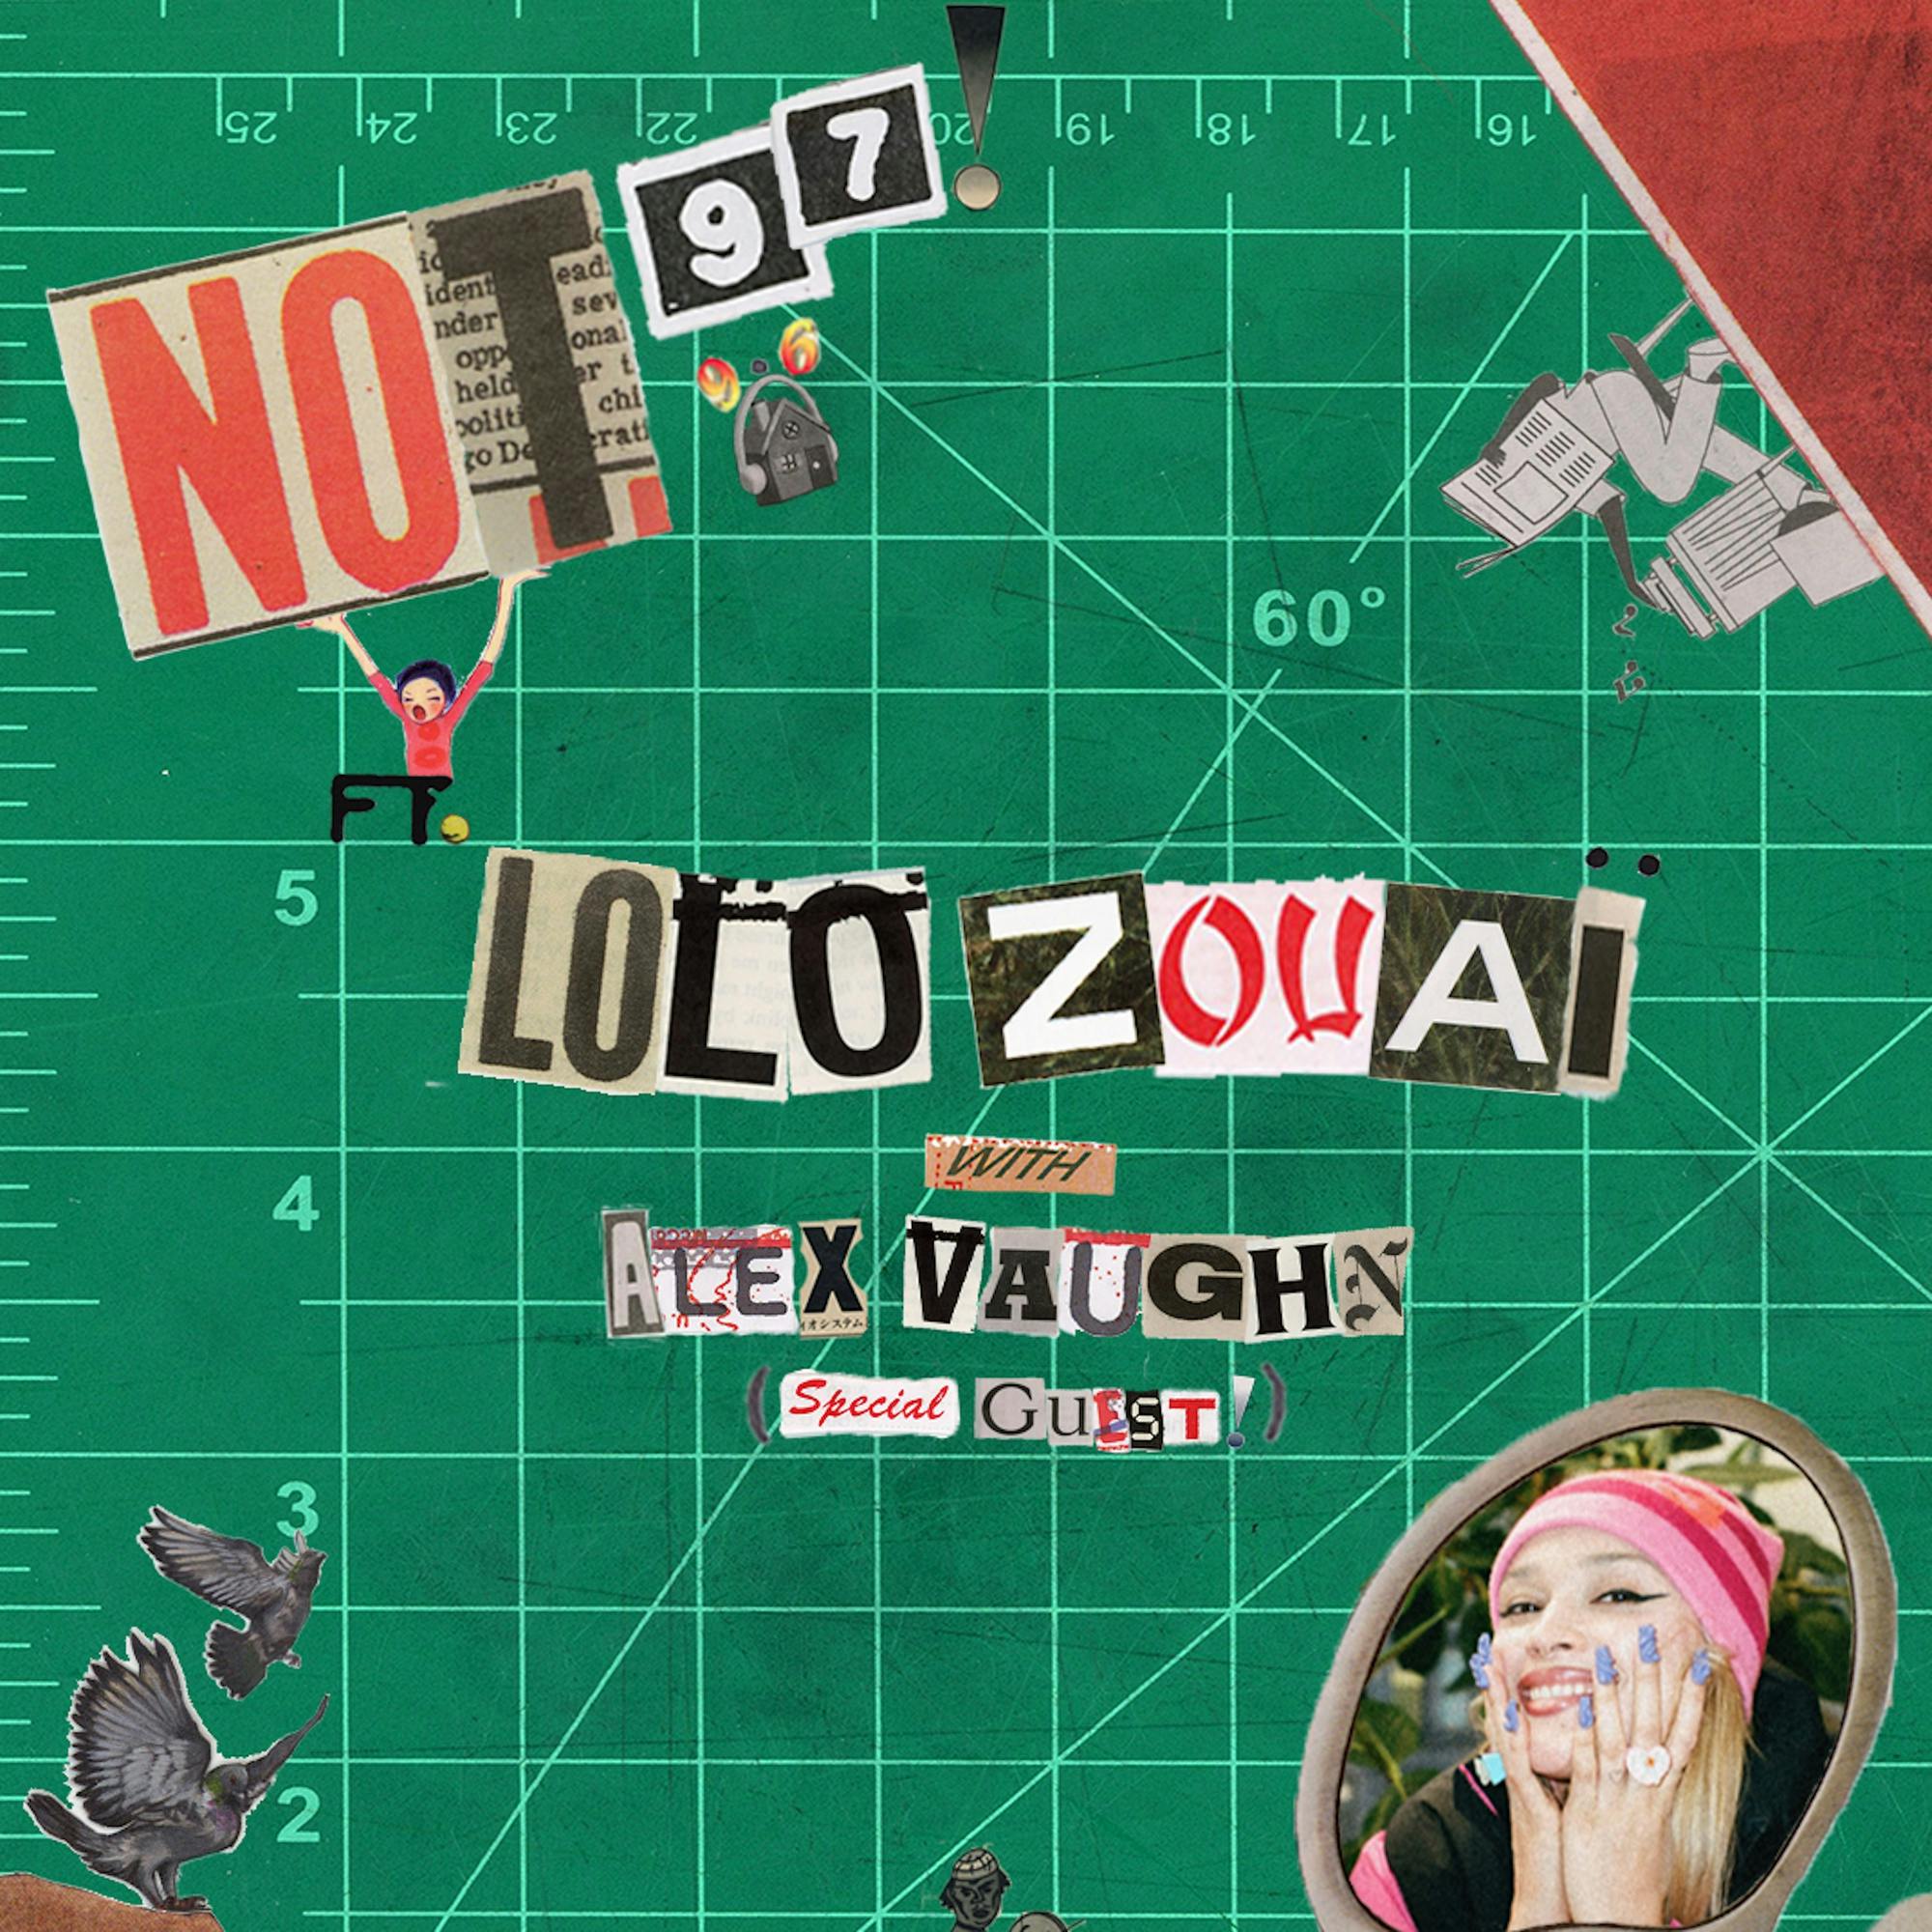 Roundtable: Lolo Zouaï for Lolo by Lolo Zouaï + Special Guest Alex Vaughn